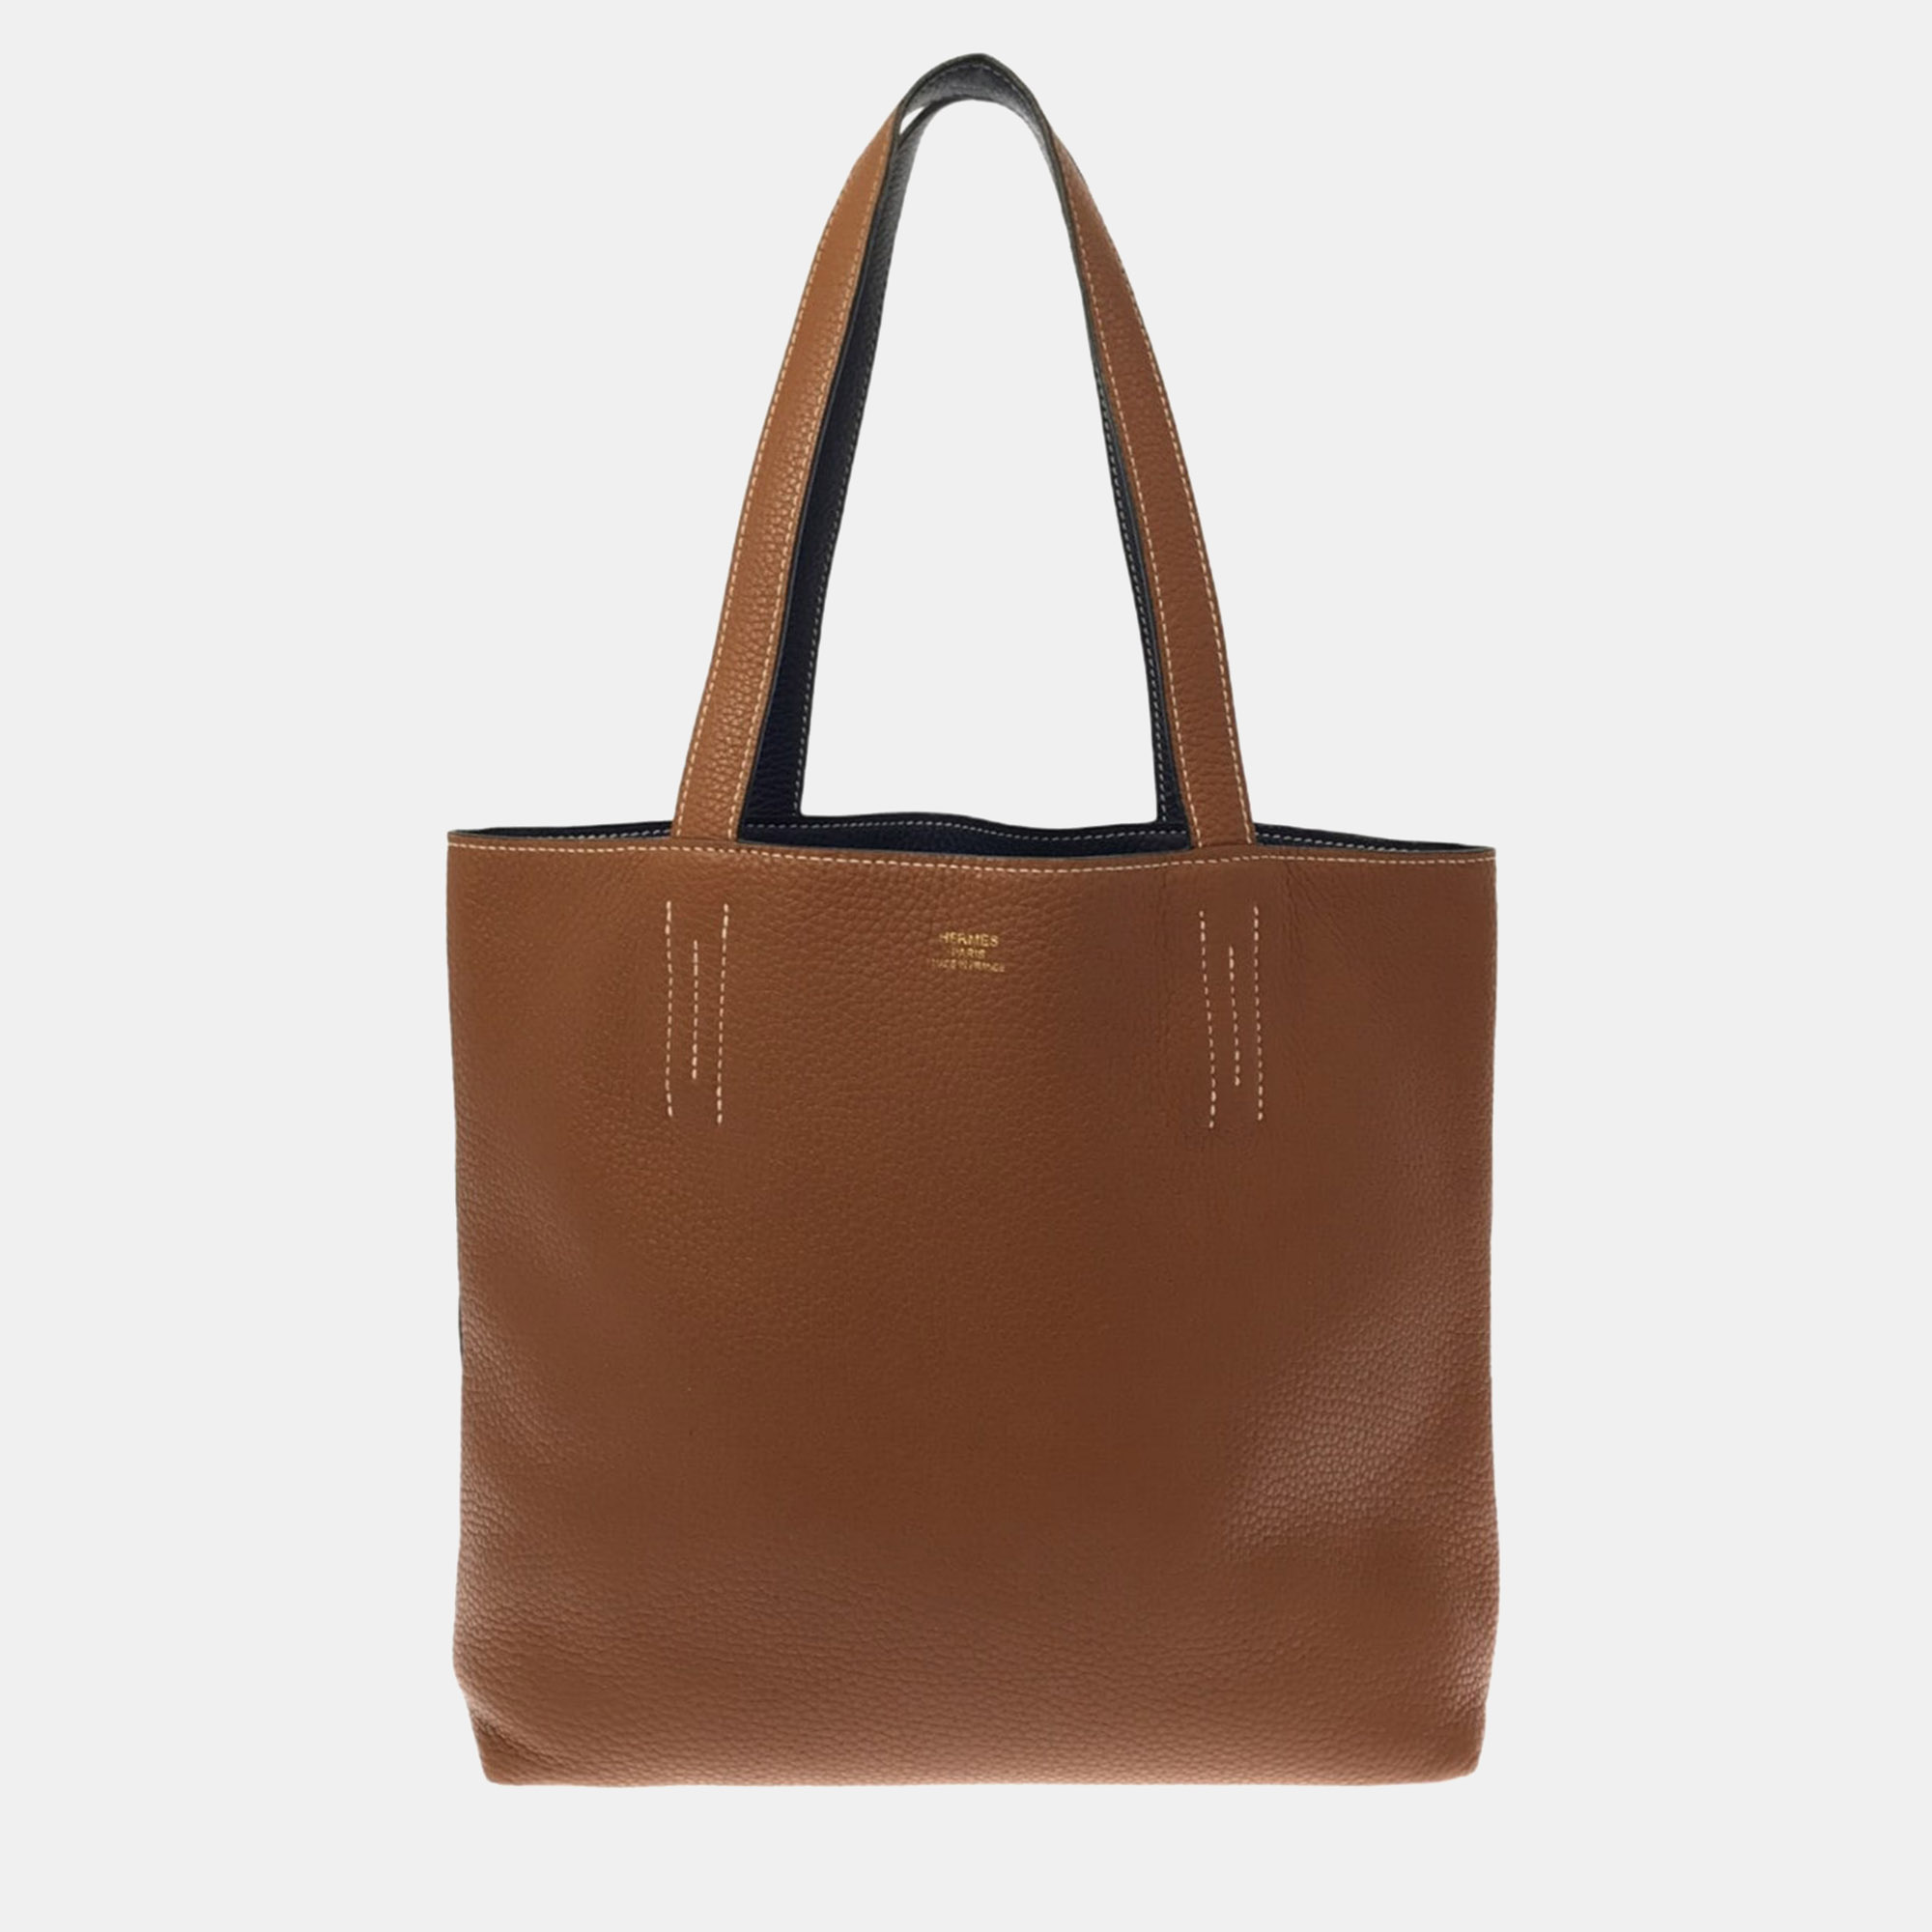 Pre-owned Hermes Brown Leather Double Sens Tote Handbag